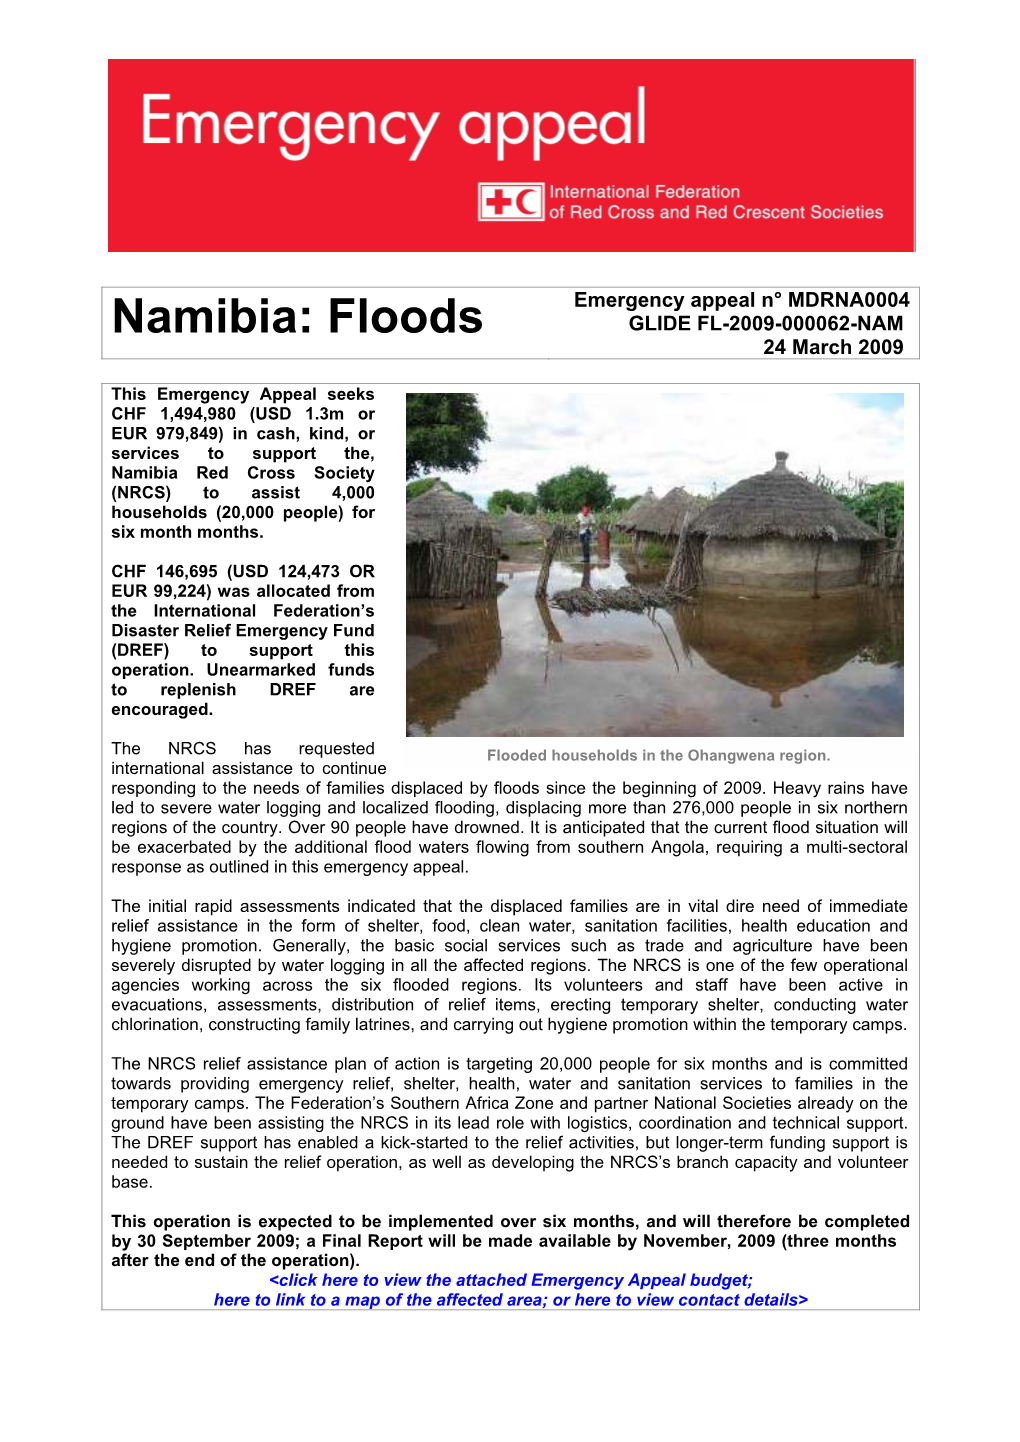 Namibia: Floods GLIDE FL-2009-000062-NAM 24 March 2009